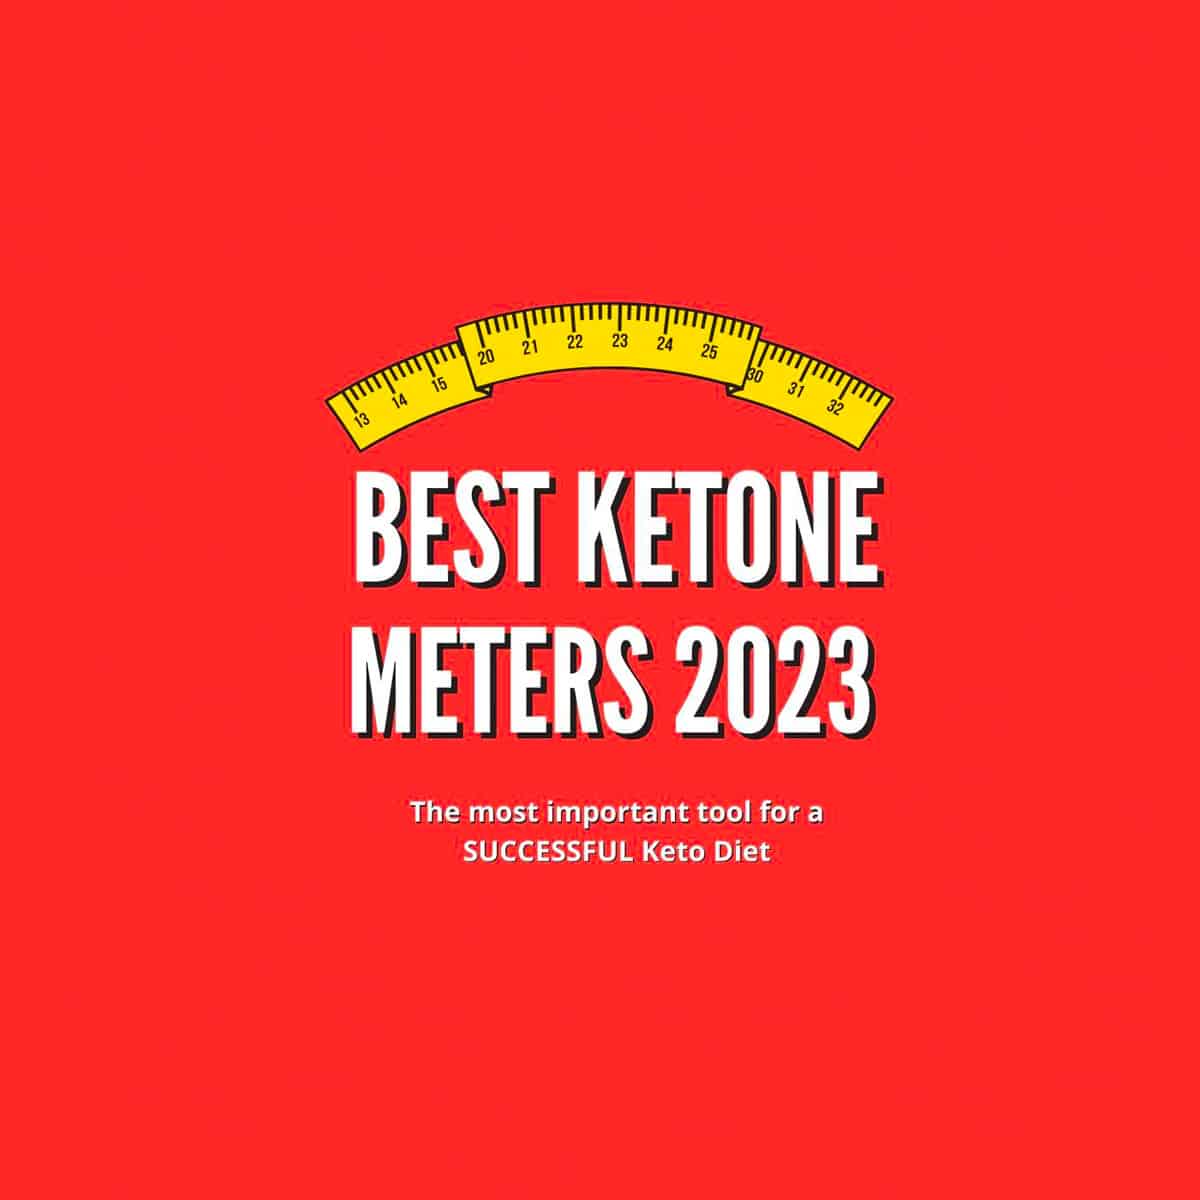 The best ketone meter for 2023.